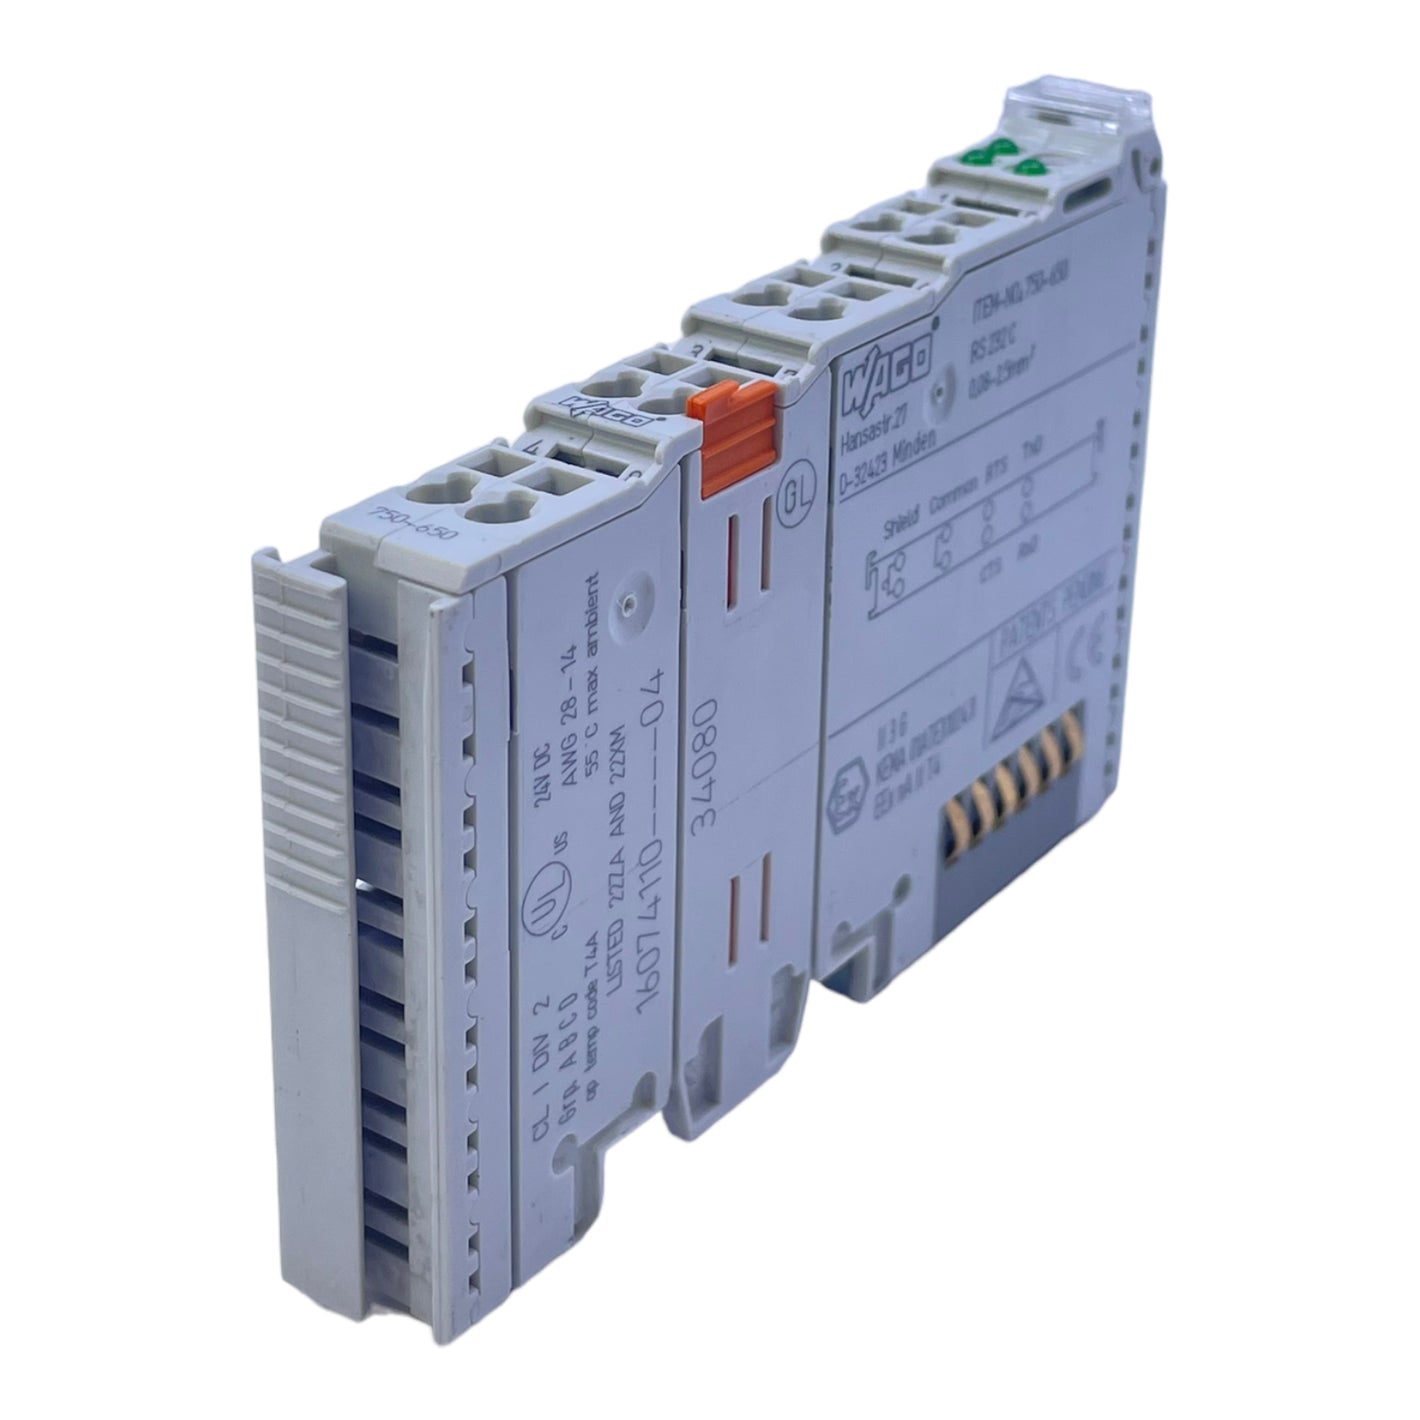 Wago 750-650 PLC serial interface 24V DC serial 